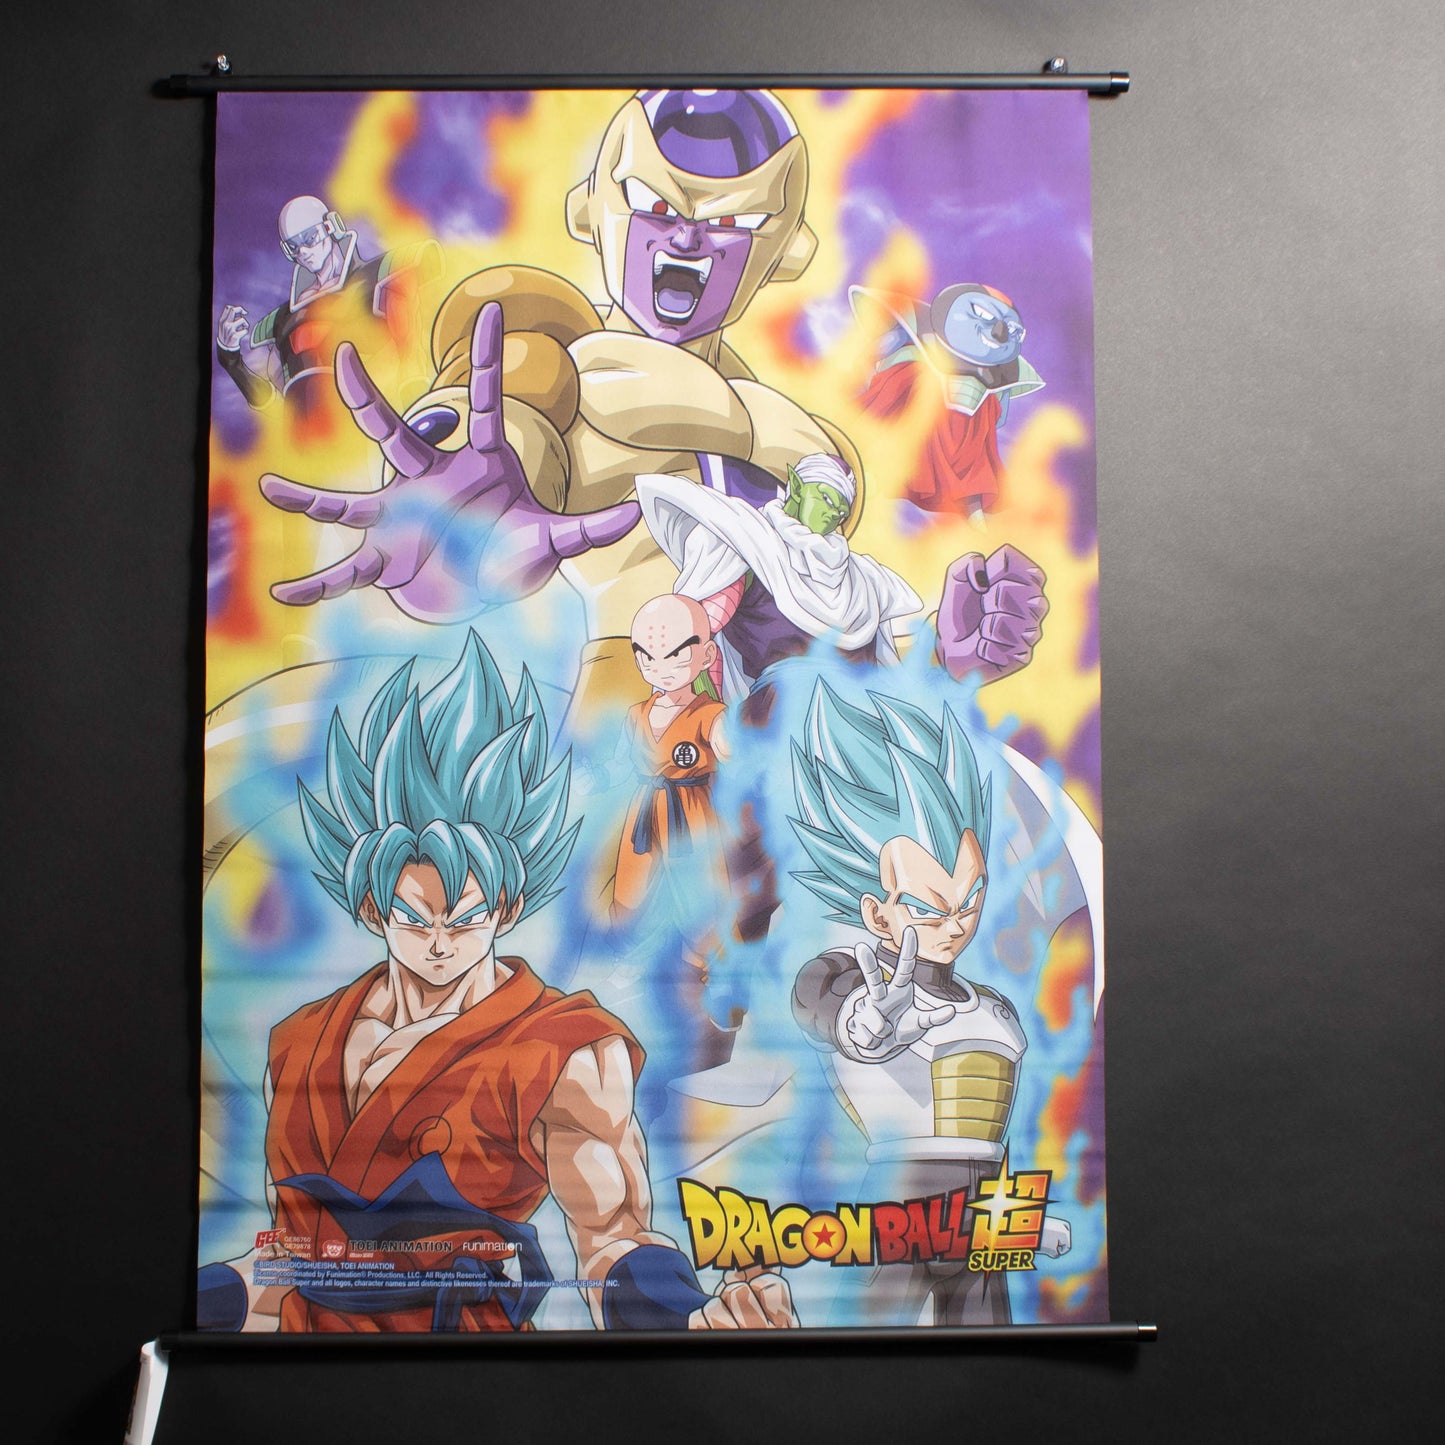 HD wallpaper: Dragonball Z Resurrection of Freeza movie poster